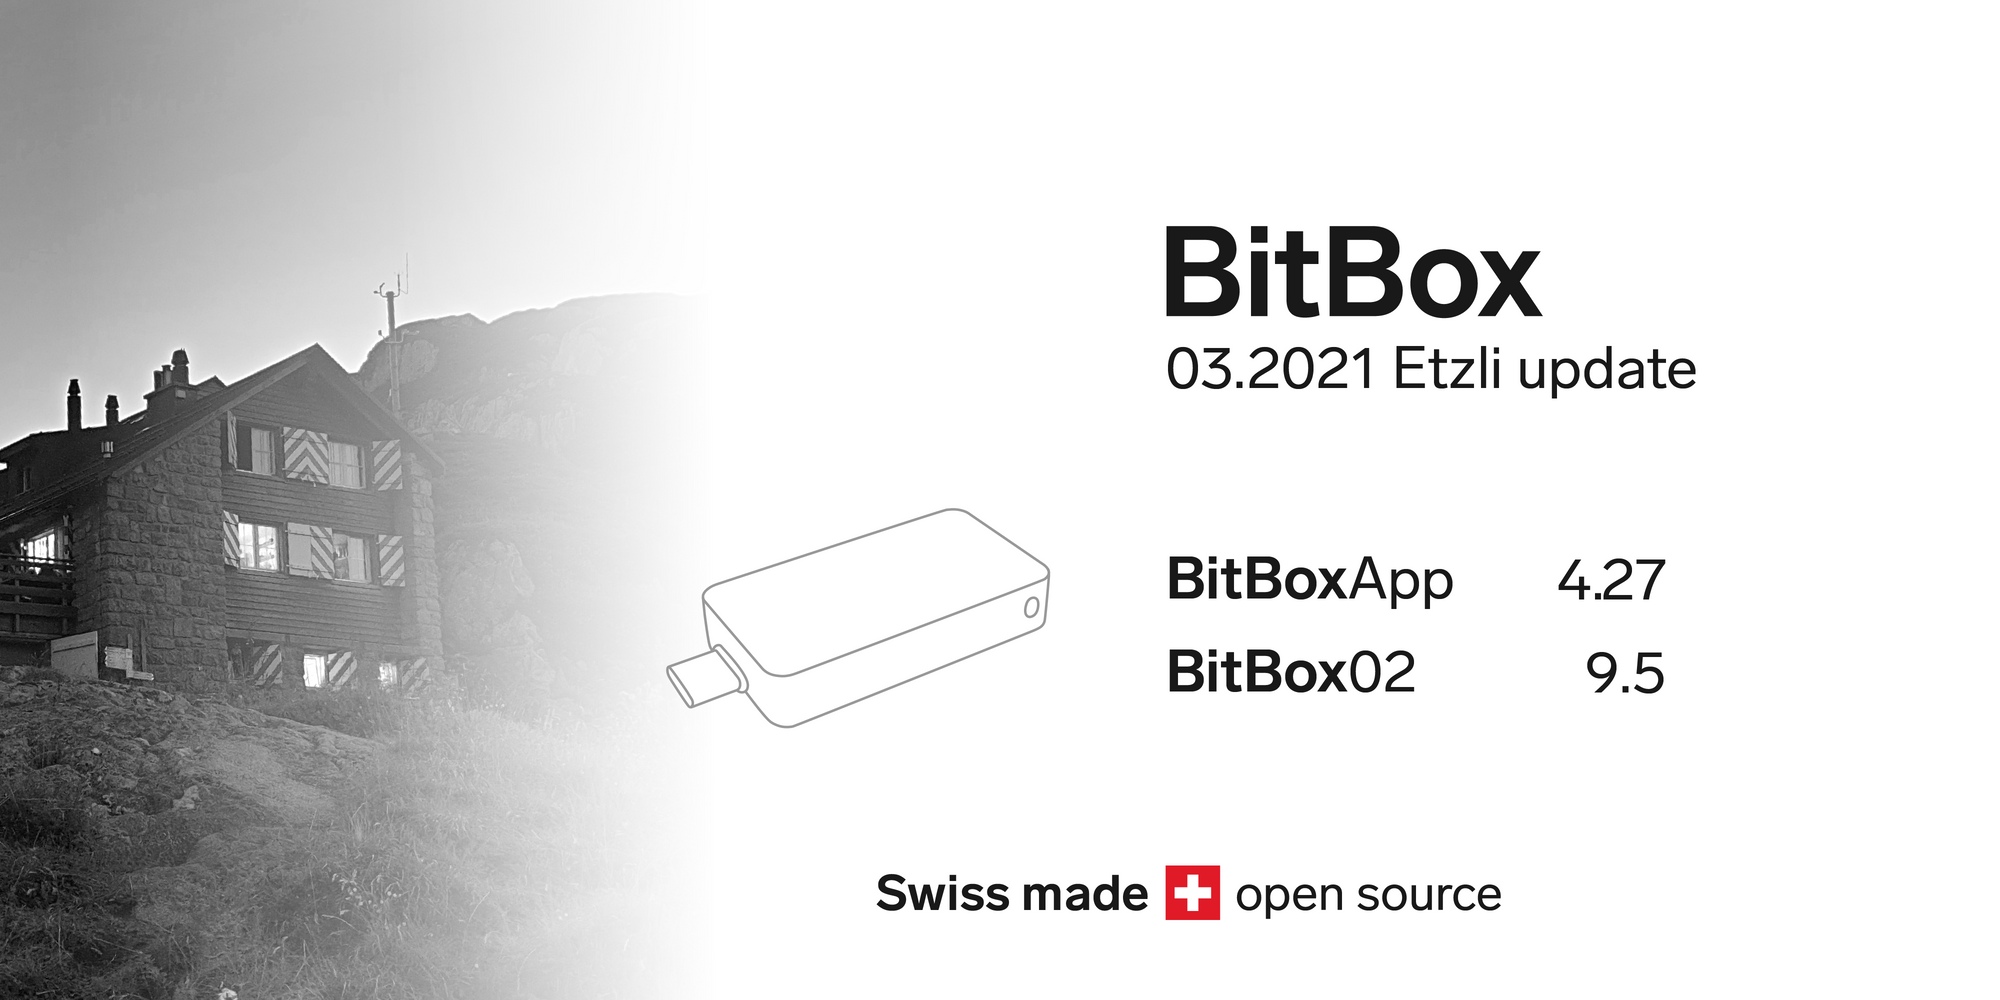 BitBox 03.2021 Etzli update